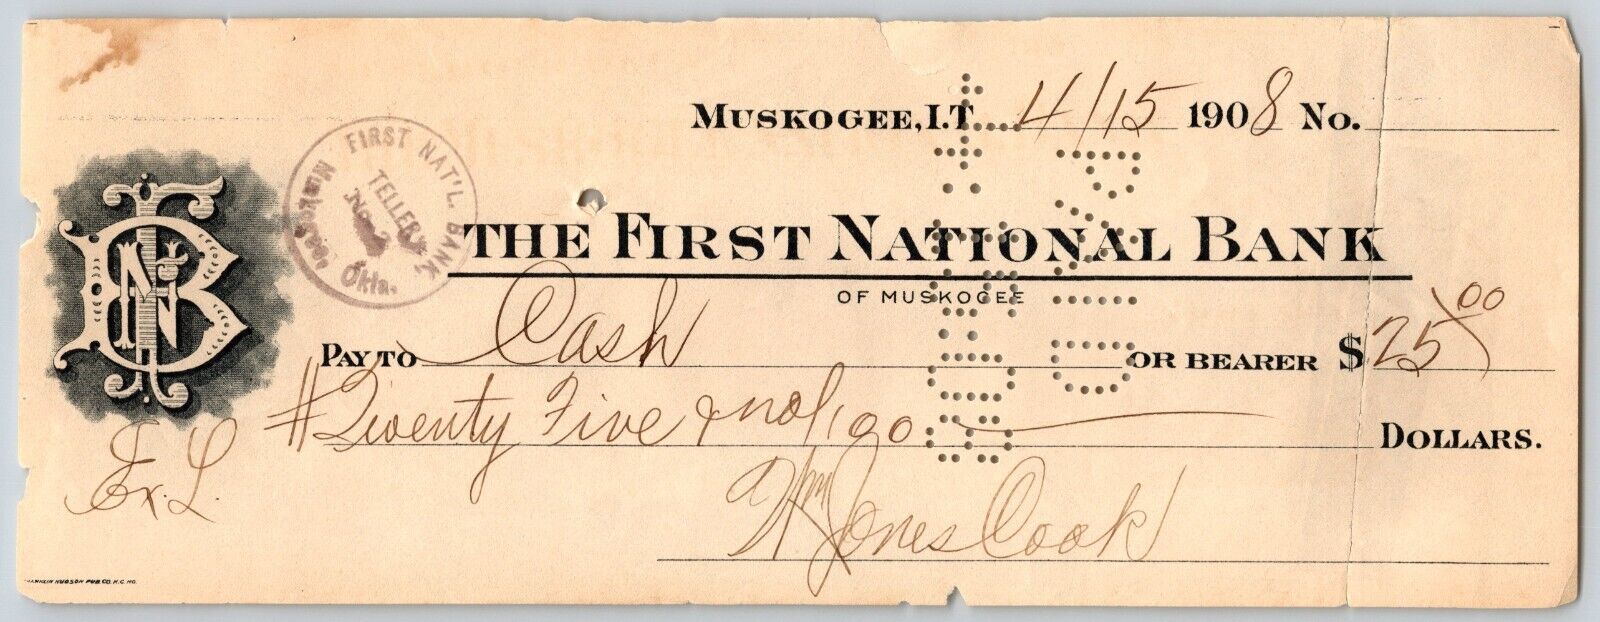 Muskogee, OK 1908 Indian Territory* FNB Bank Check - Scarce